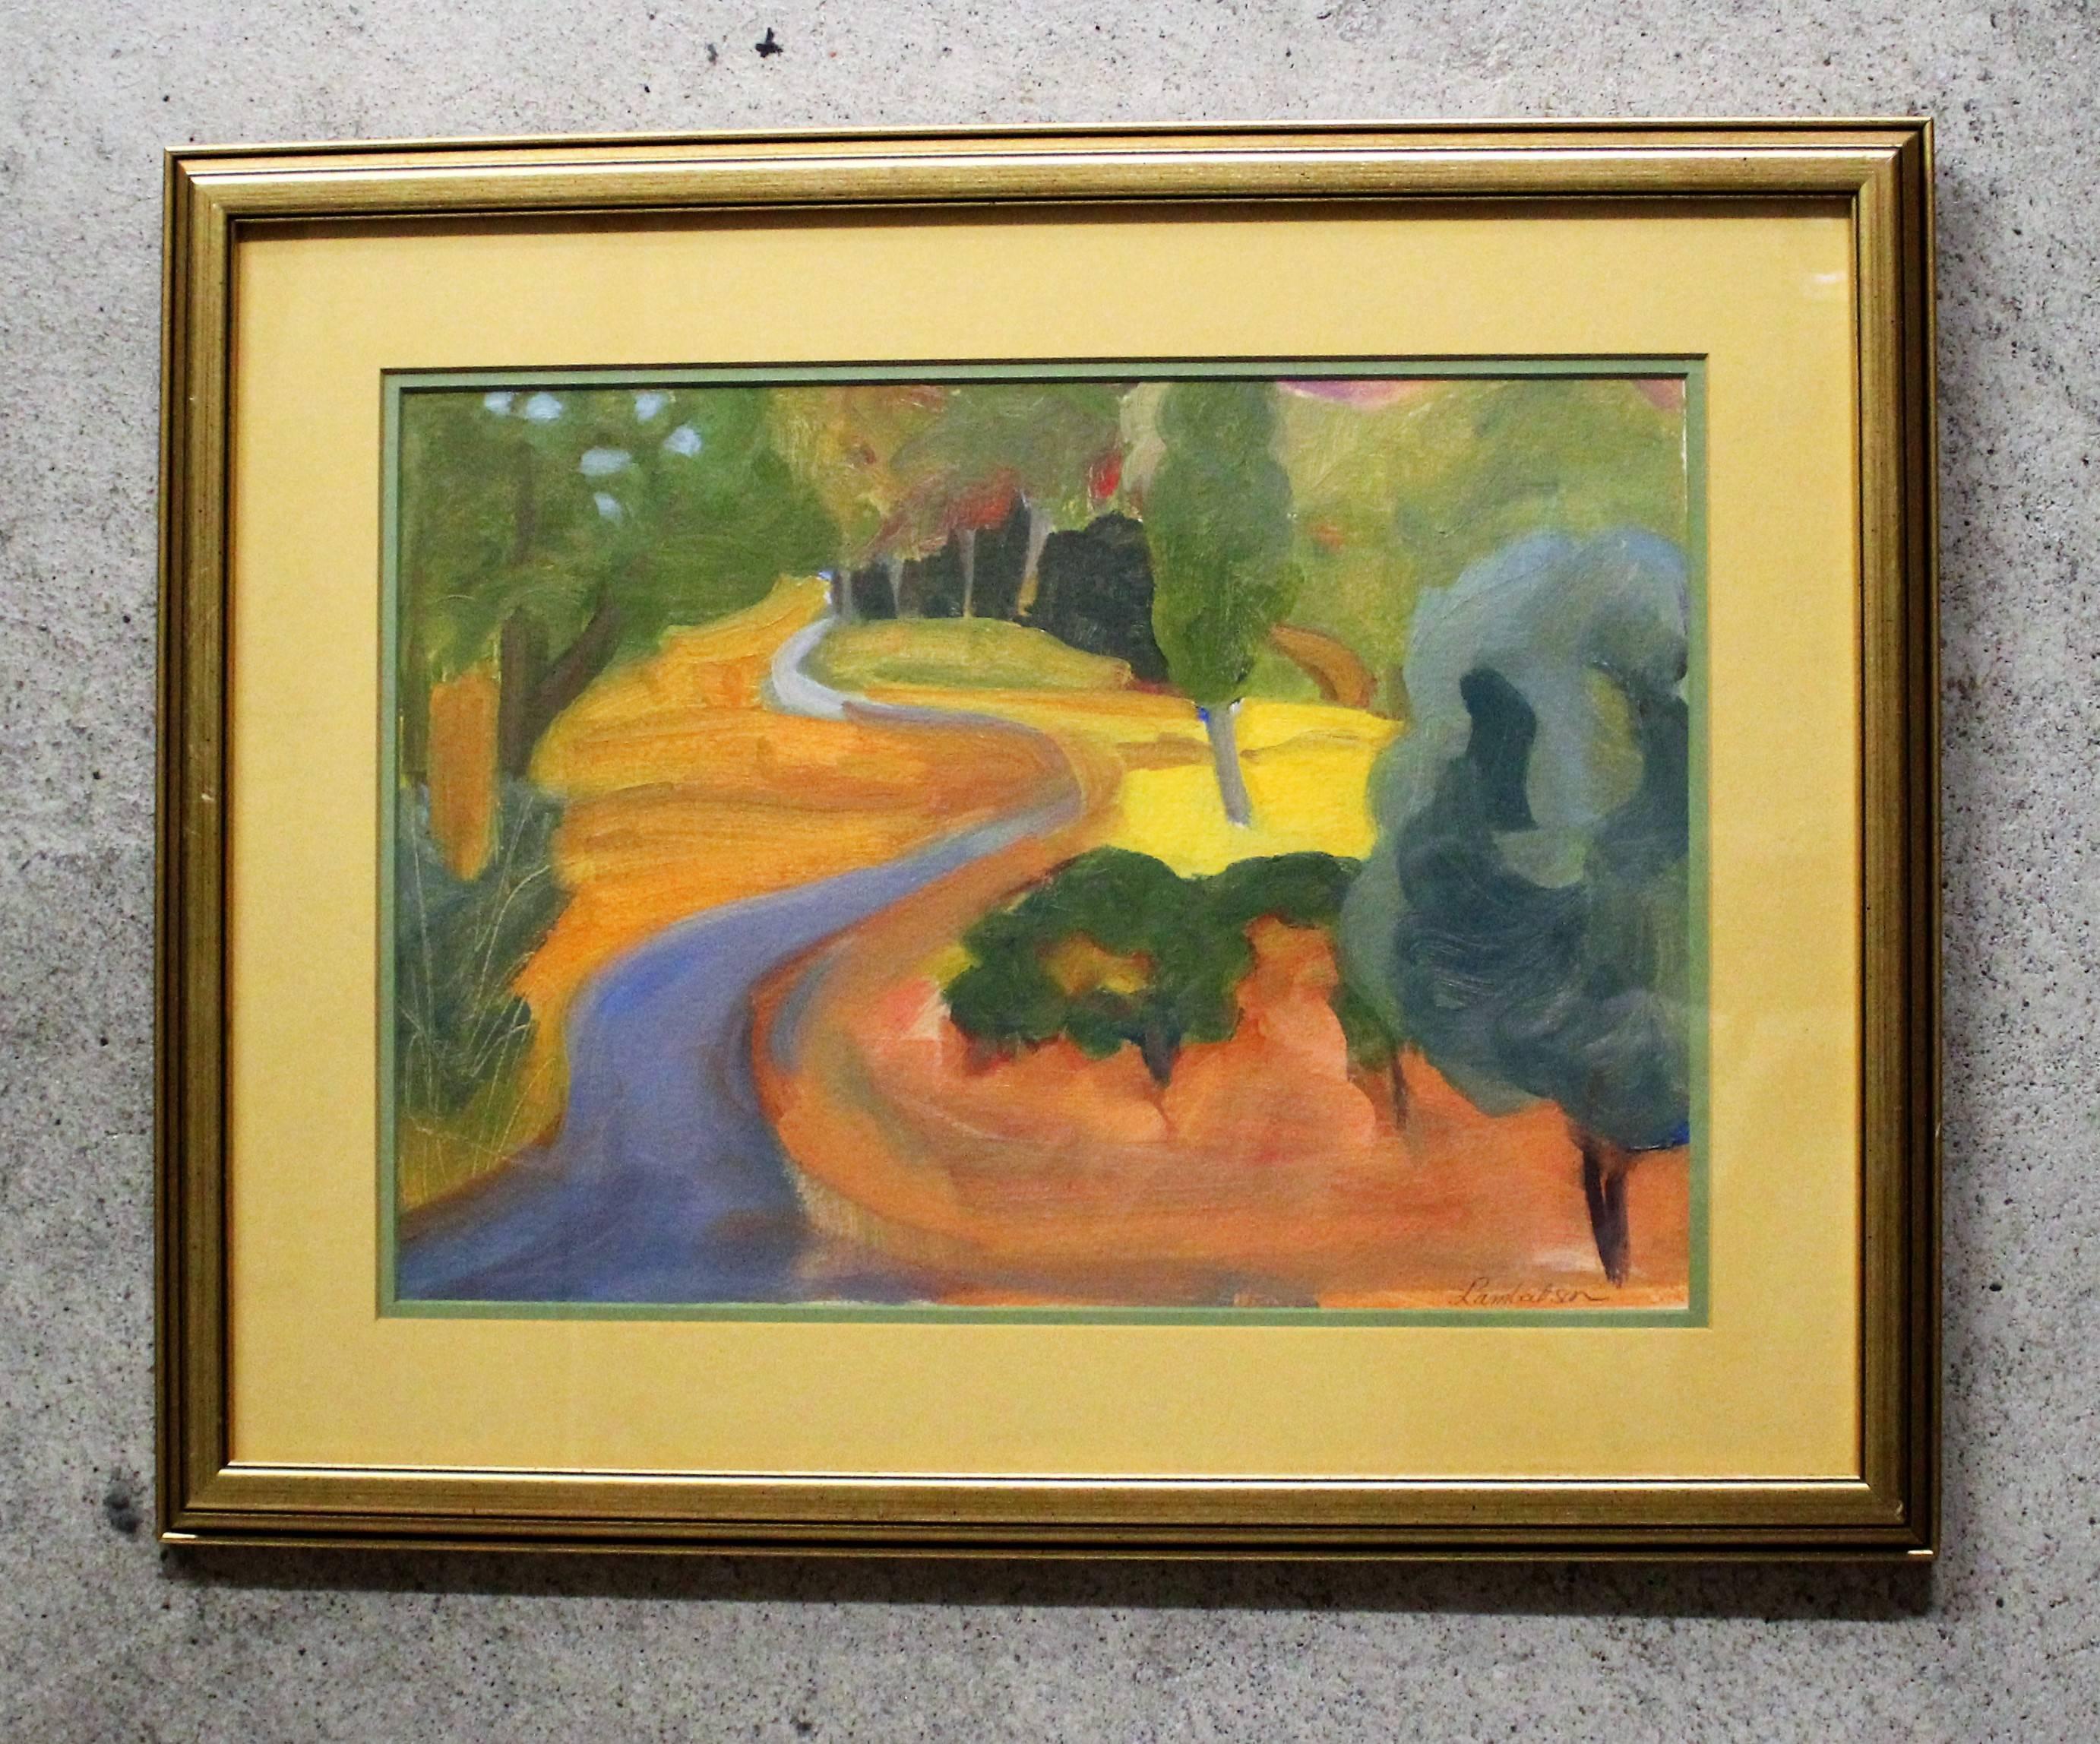 Judith Lambertson painting (American)
Size without frame: 10.5" high x 14.5" wide
Size with frame: 15.5" high x 19.5" wide